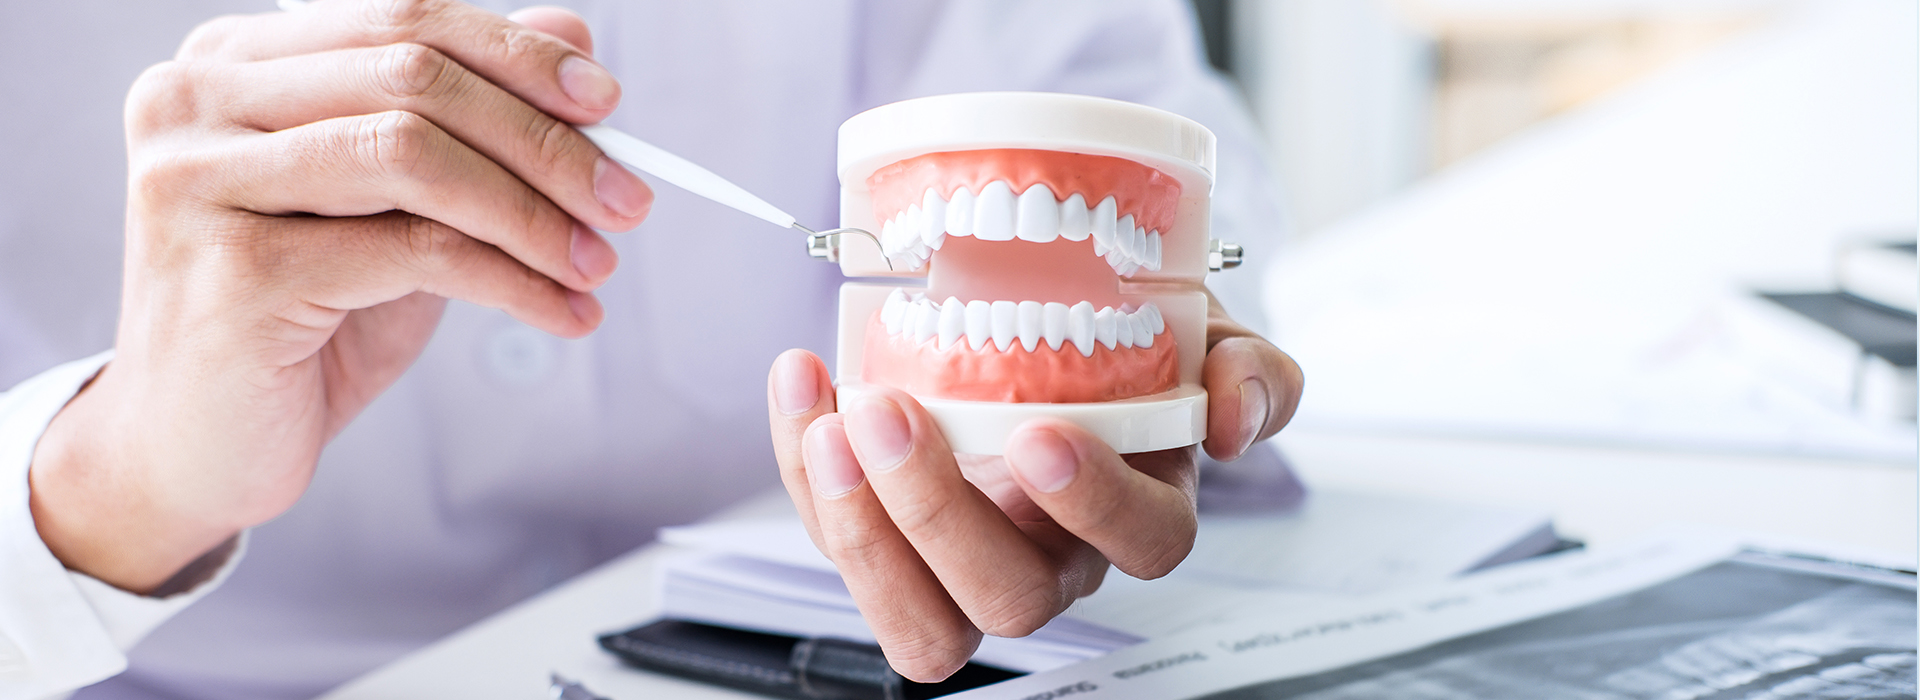 Bright Smile Dental Care, LTD | Dentures, All-on-4 reg  and Oral Cancer Screening